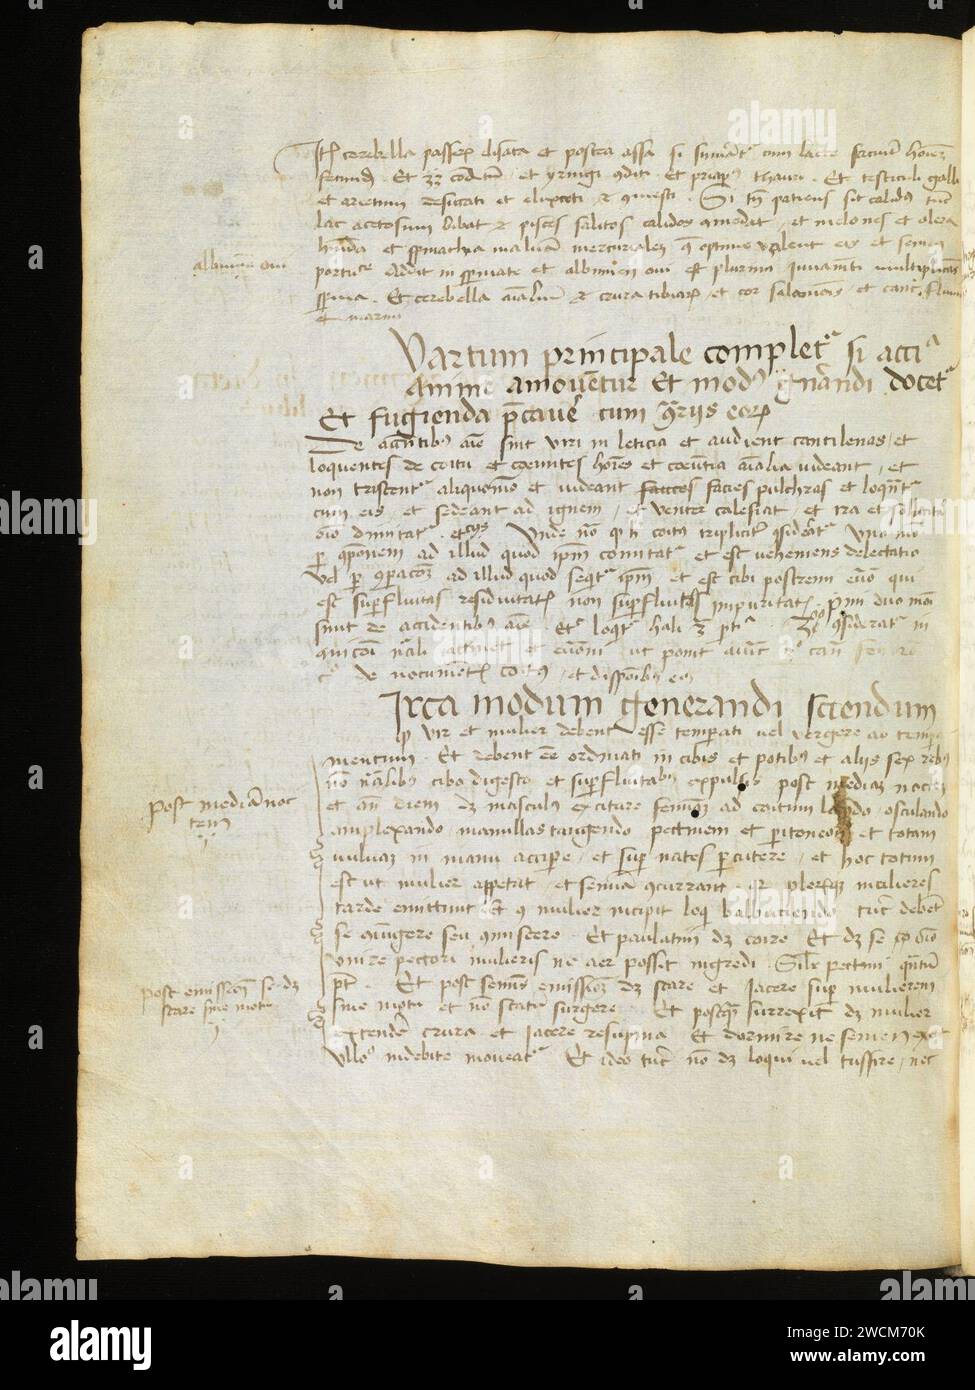 Aarau, Aargauer Kantonsbibliothek, MsMurF 85, F. 2 0021v – Antonius Guainerius, Tractatus medicinales. Banque D'Images